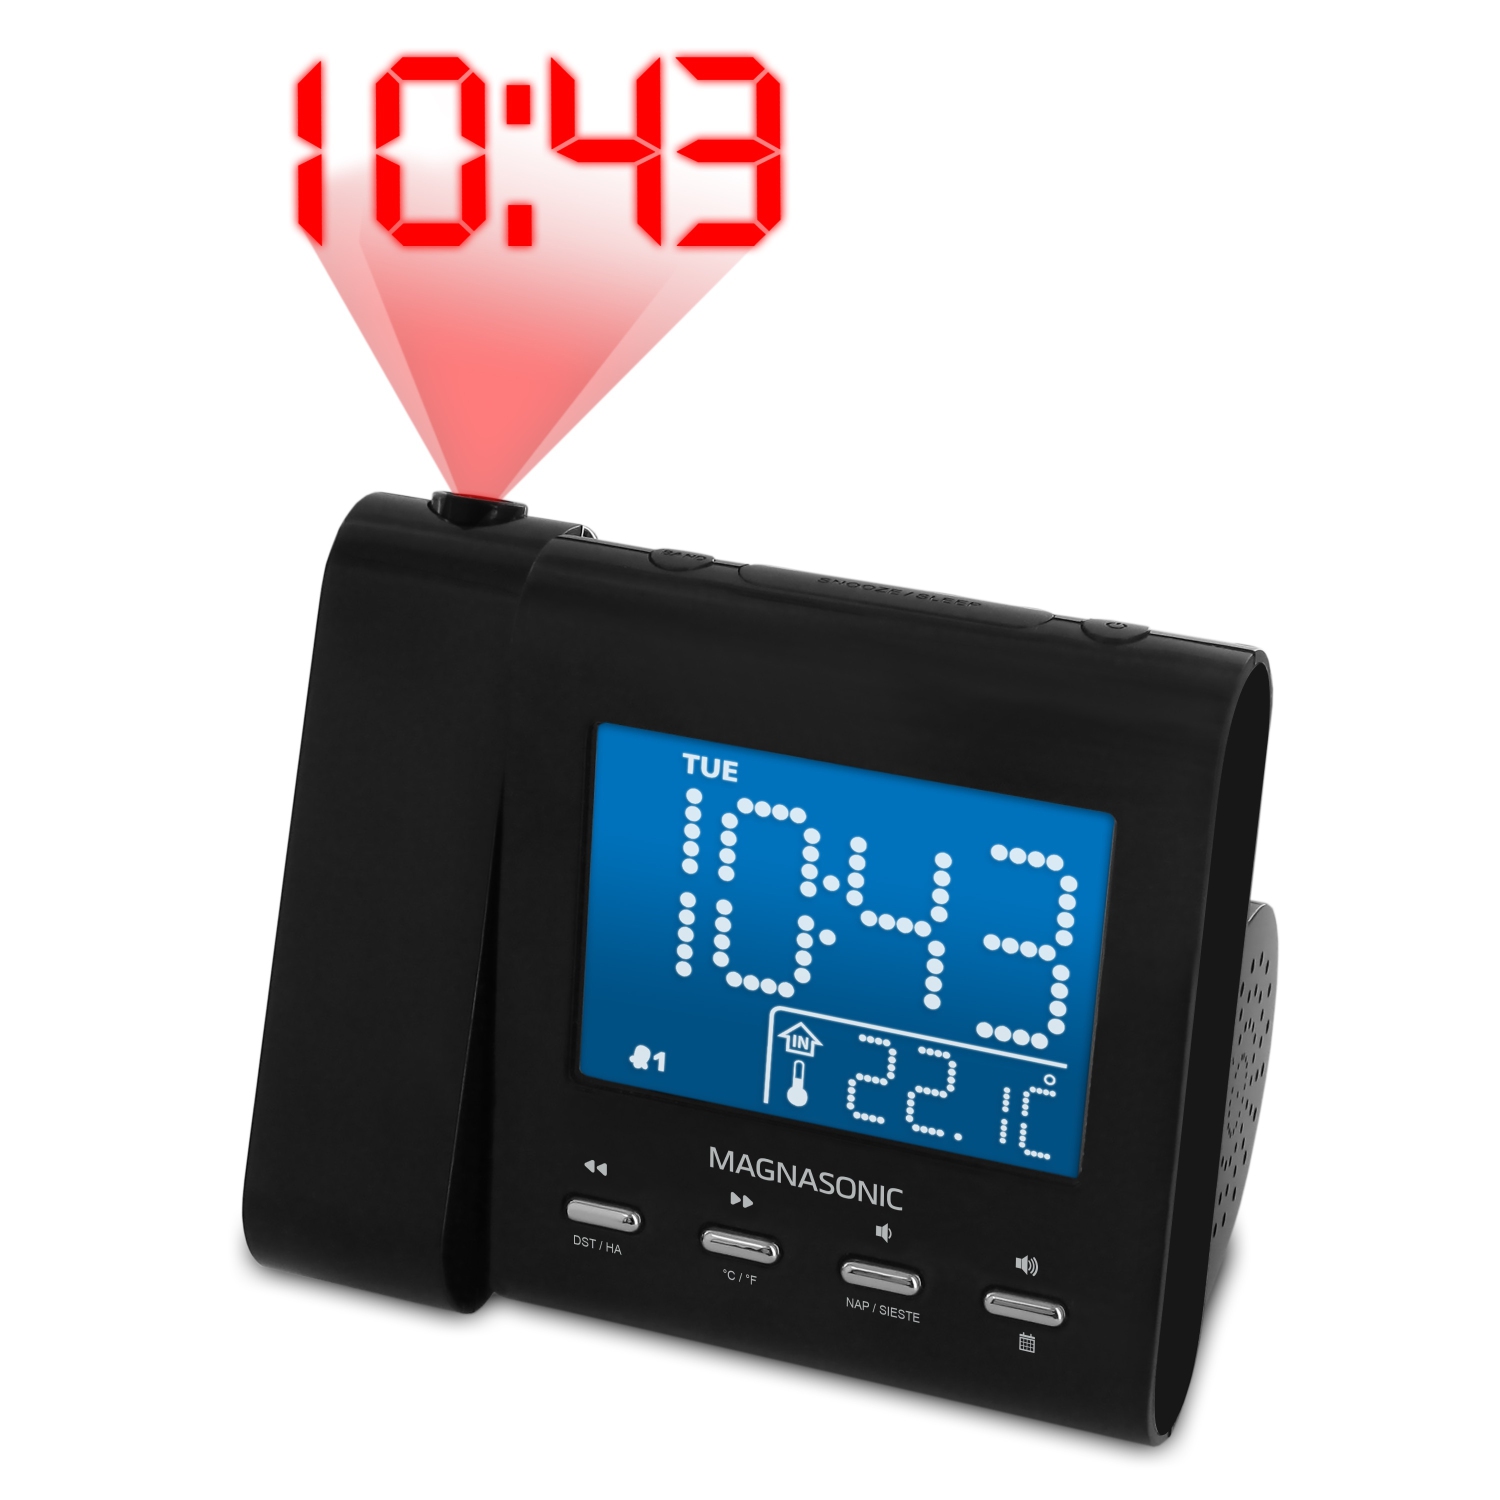 Magnasonic Projection Alarm Clock with AM/FM Radio, Battery Backup